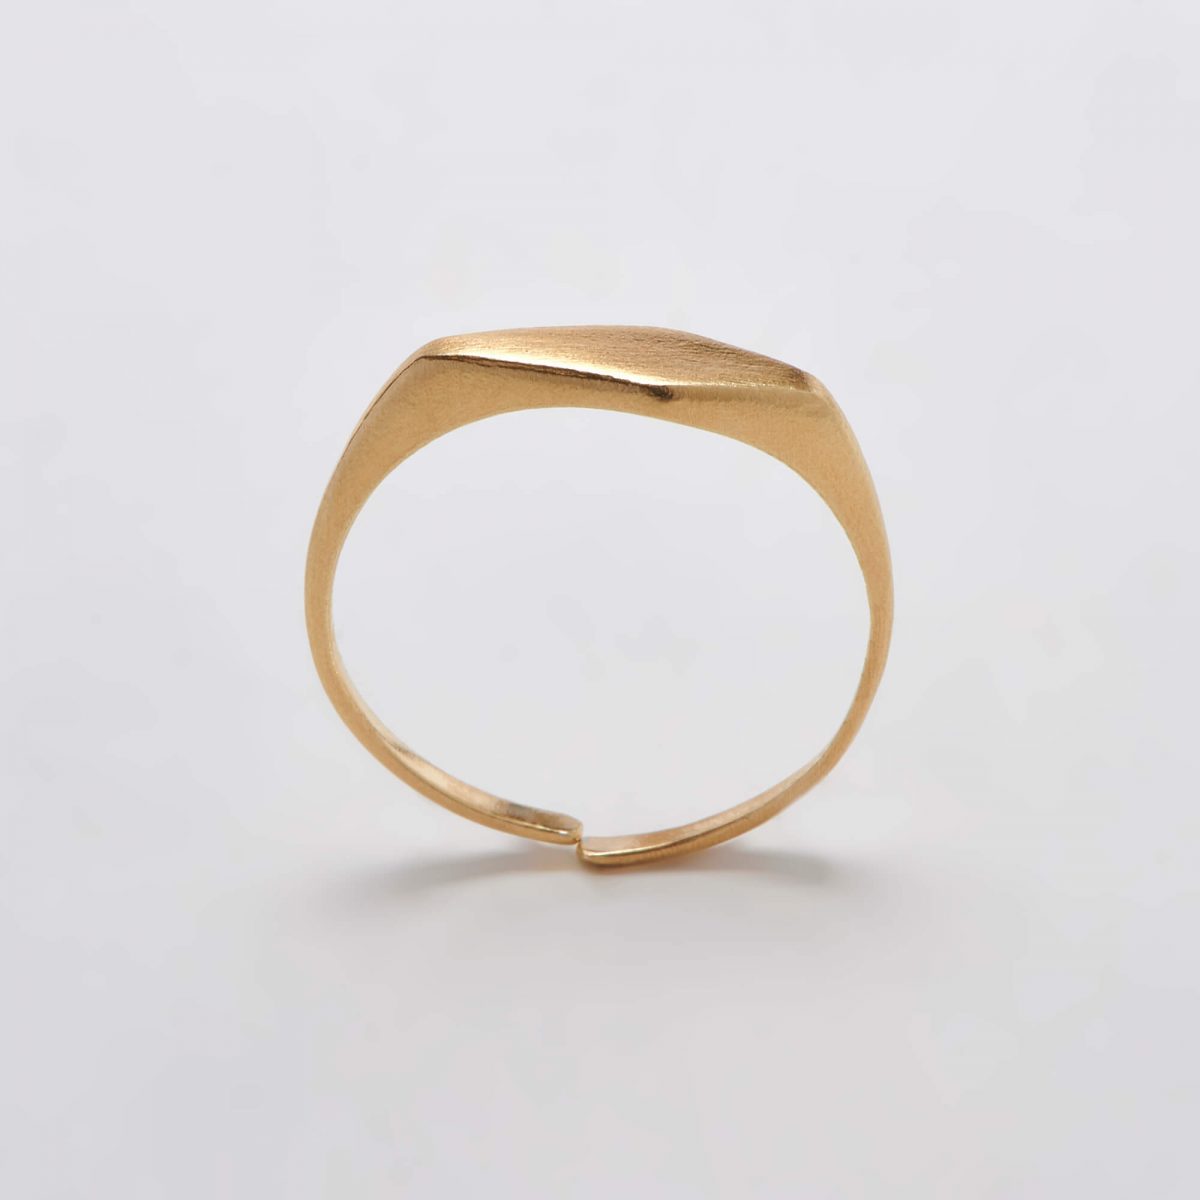 Gold Diamond Ring by Xoutou's